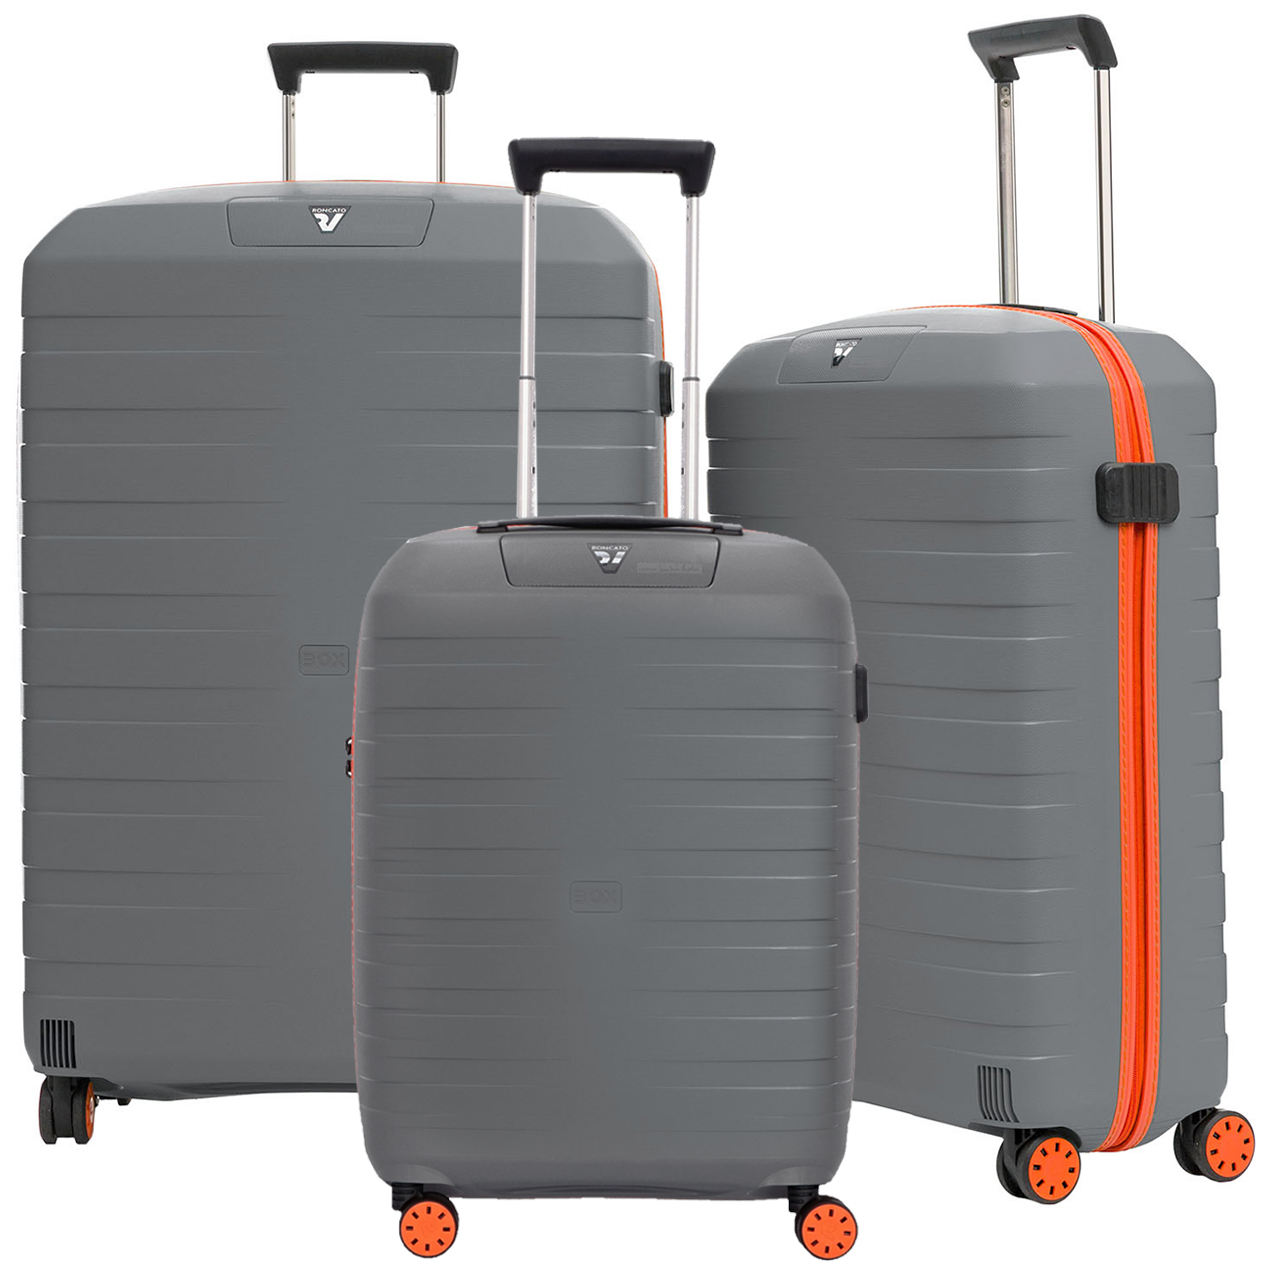 کیف-ساک-چمدان مسافرتی -لوازم سفر- مجموعه سه عددی چمدان رونکاتو مدل BOX کد 5540